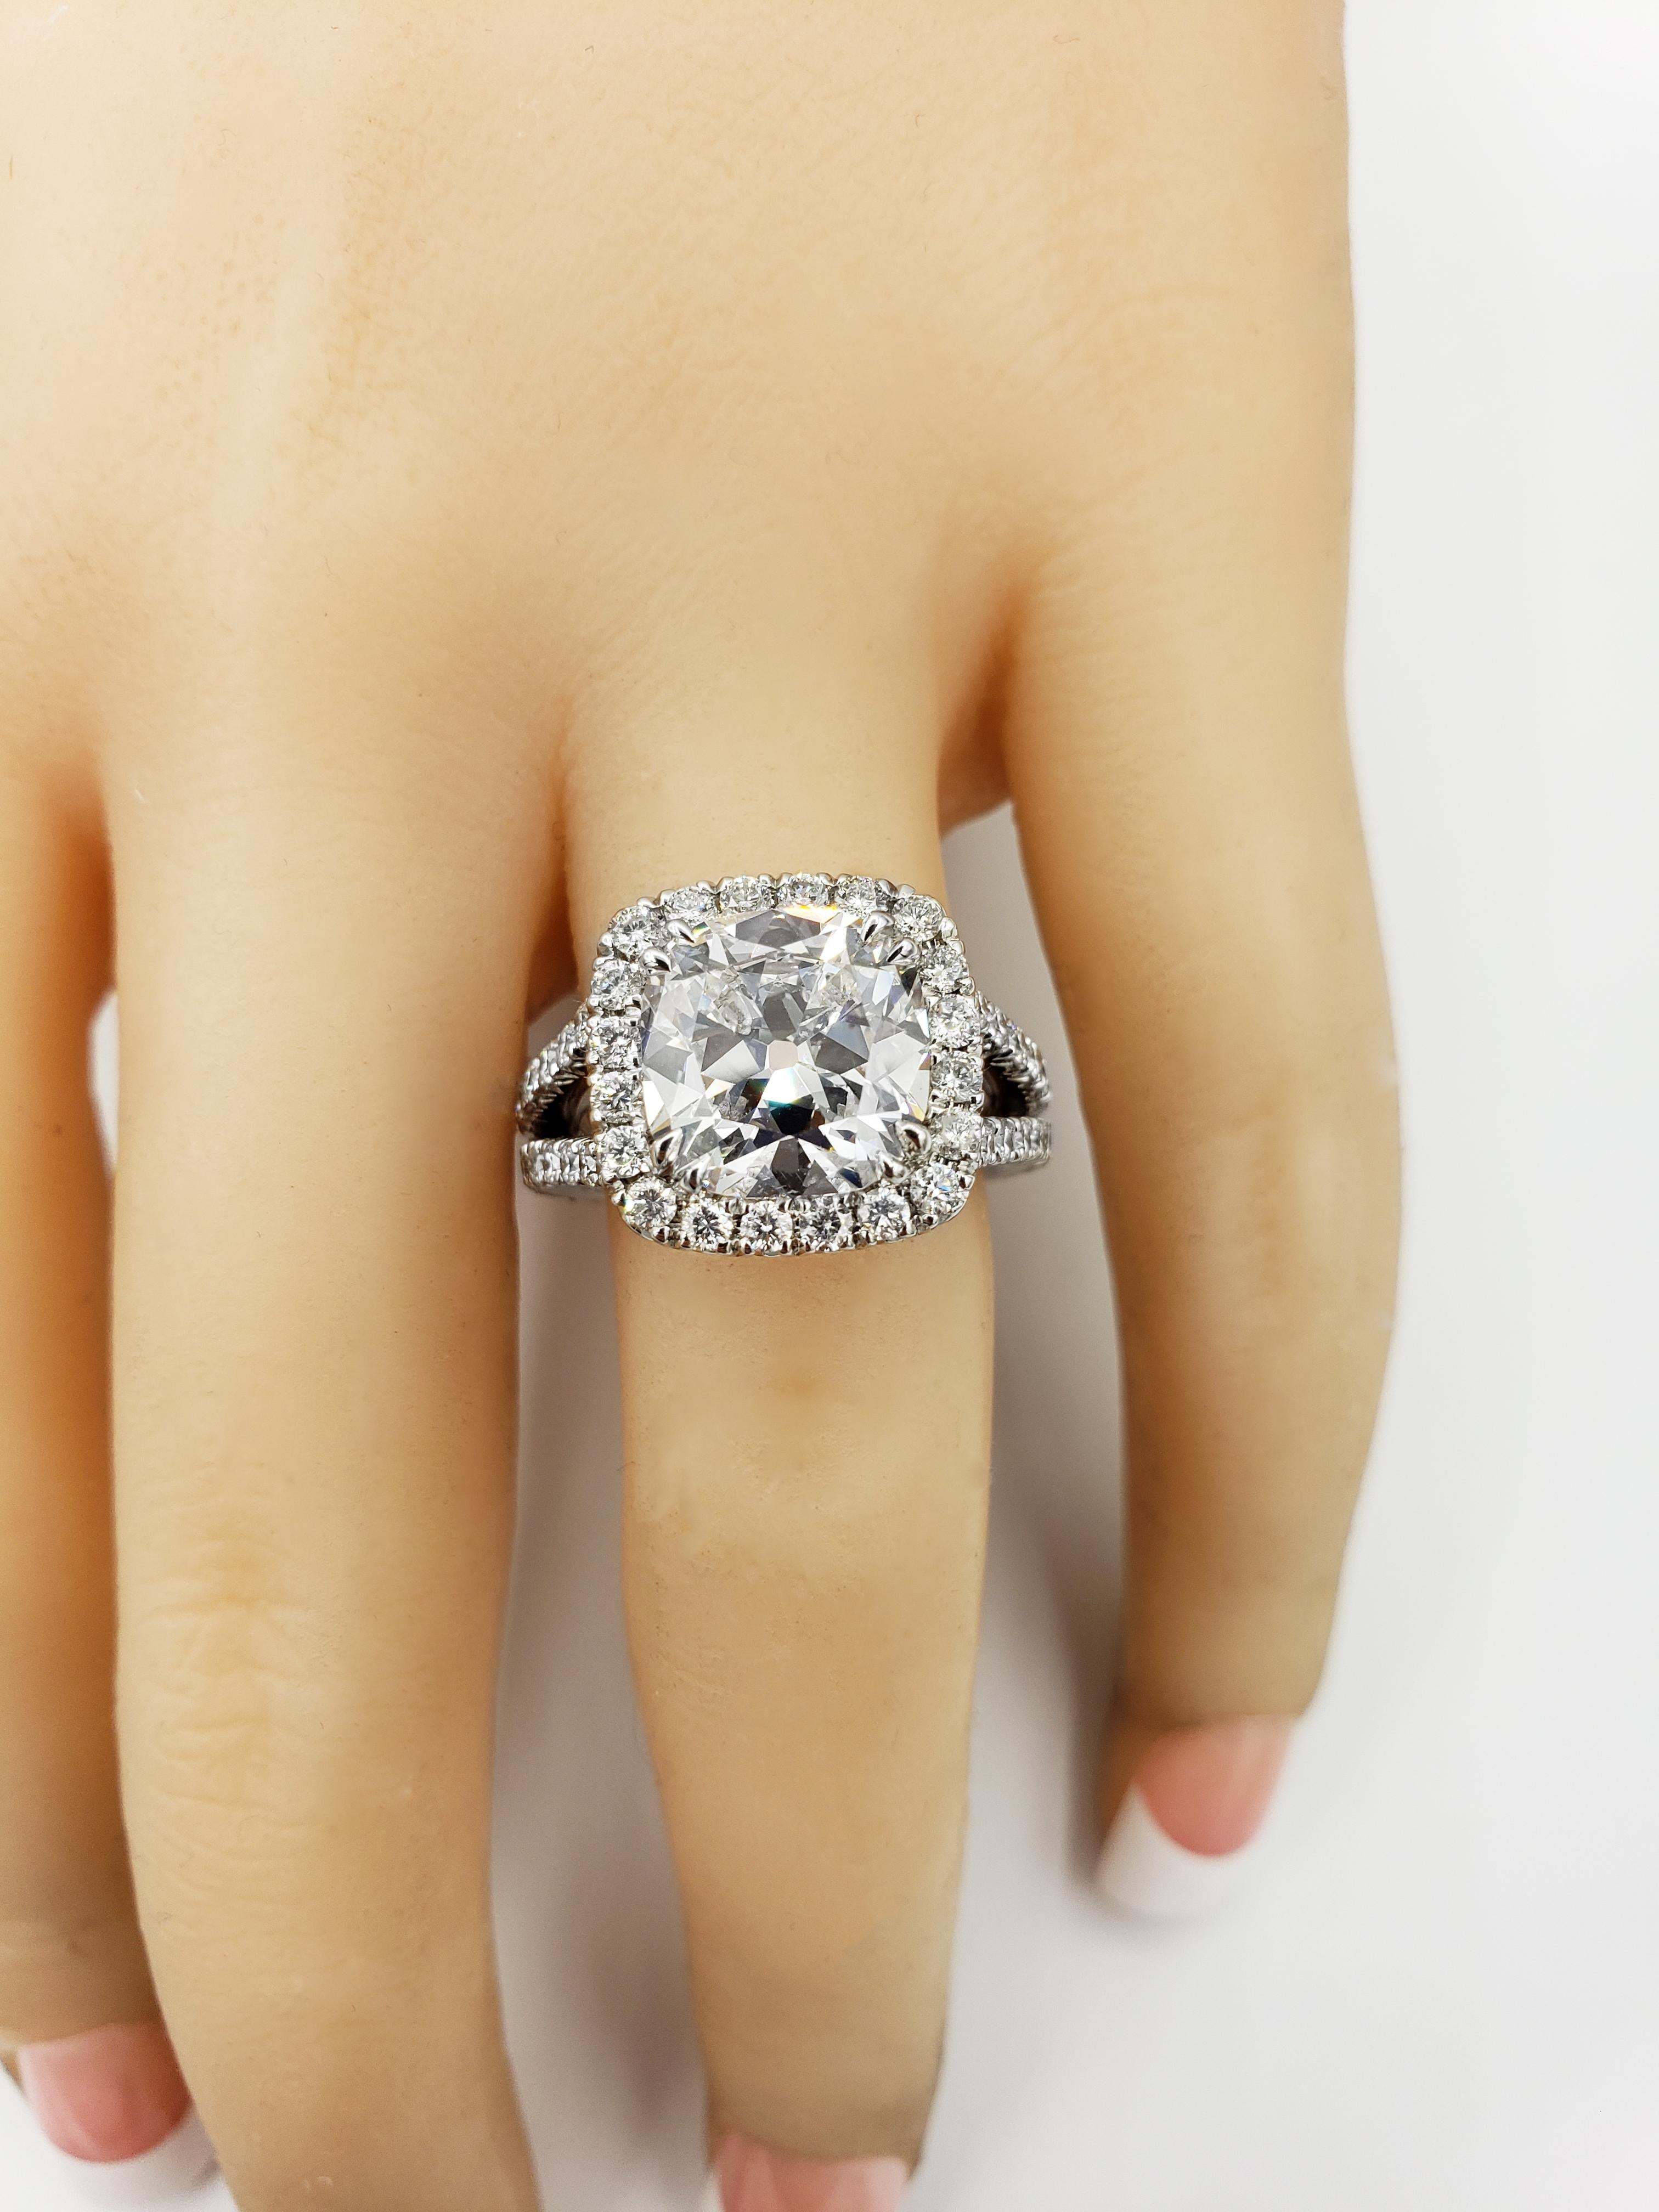 Roman Malakov GIA Certified 4.11 Carat Cushion Cut Diamond Halo Engagement Ring For Sale 1